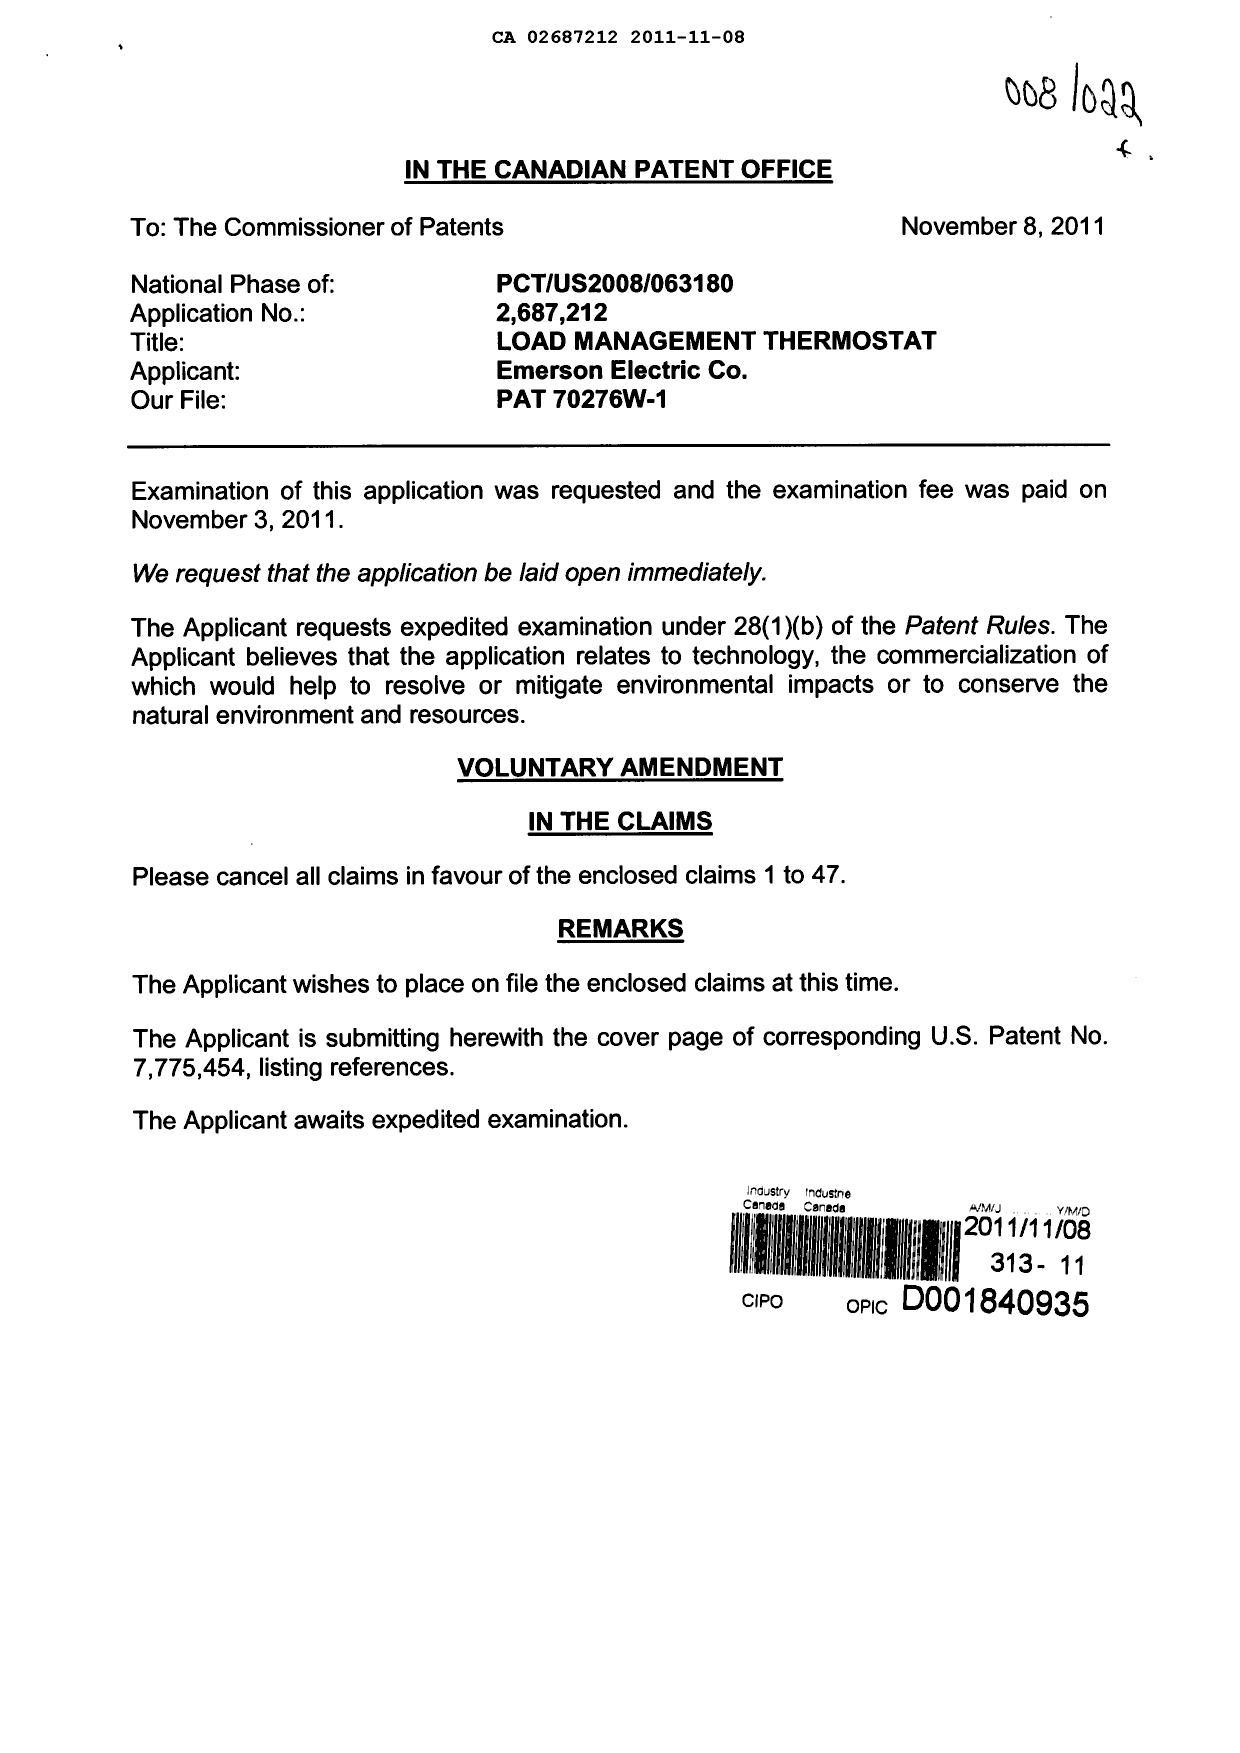 Canadian Patent Document 2687212. Correspondence 20111108. Image 1 of 2